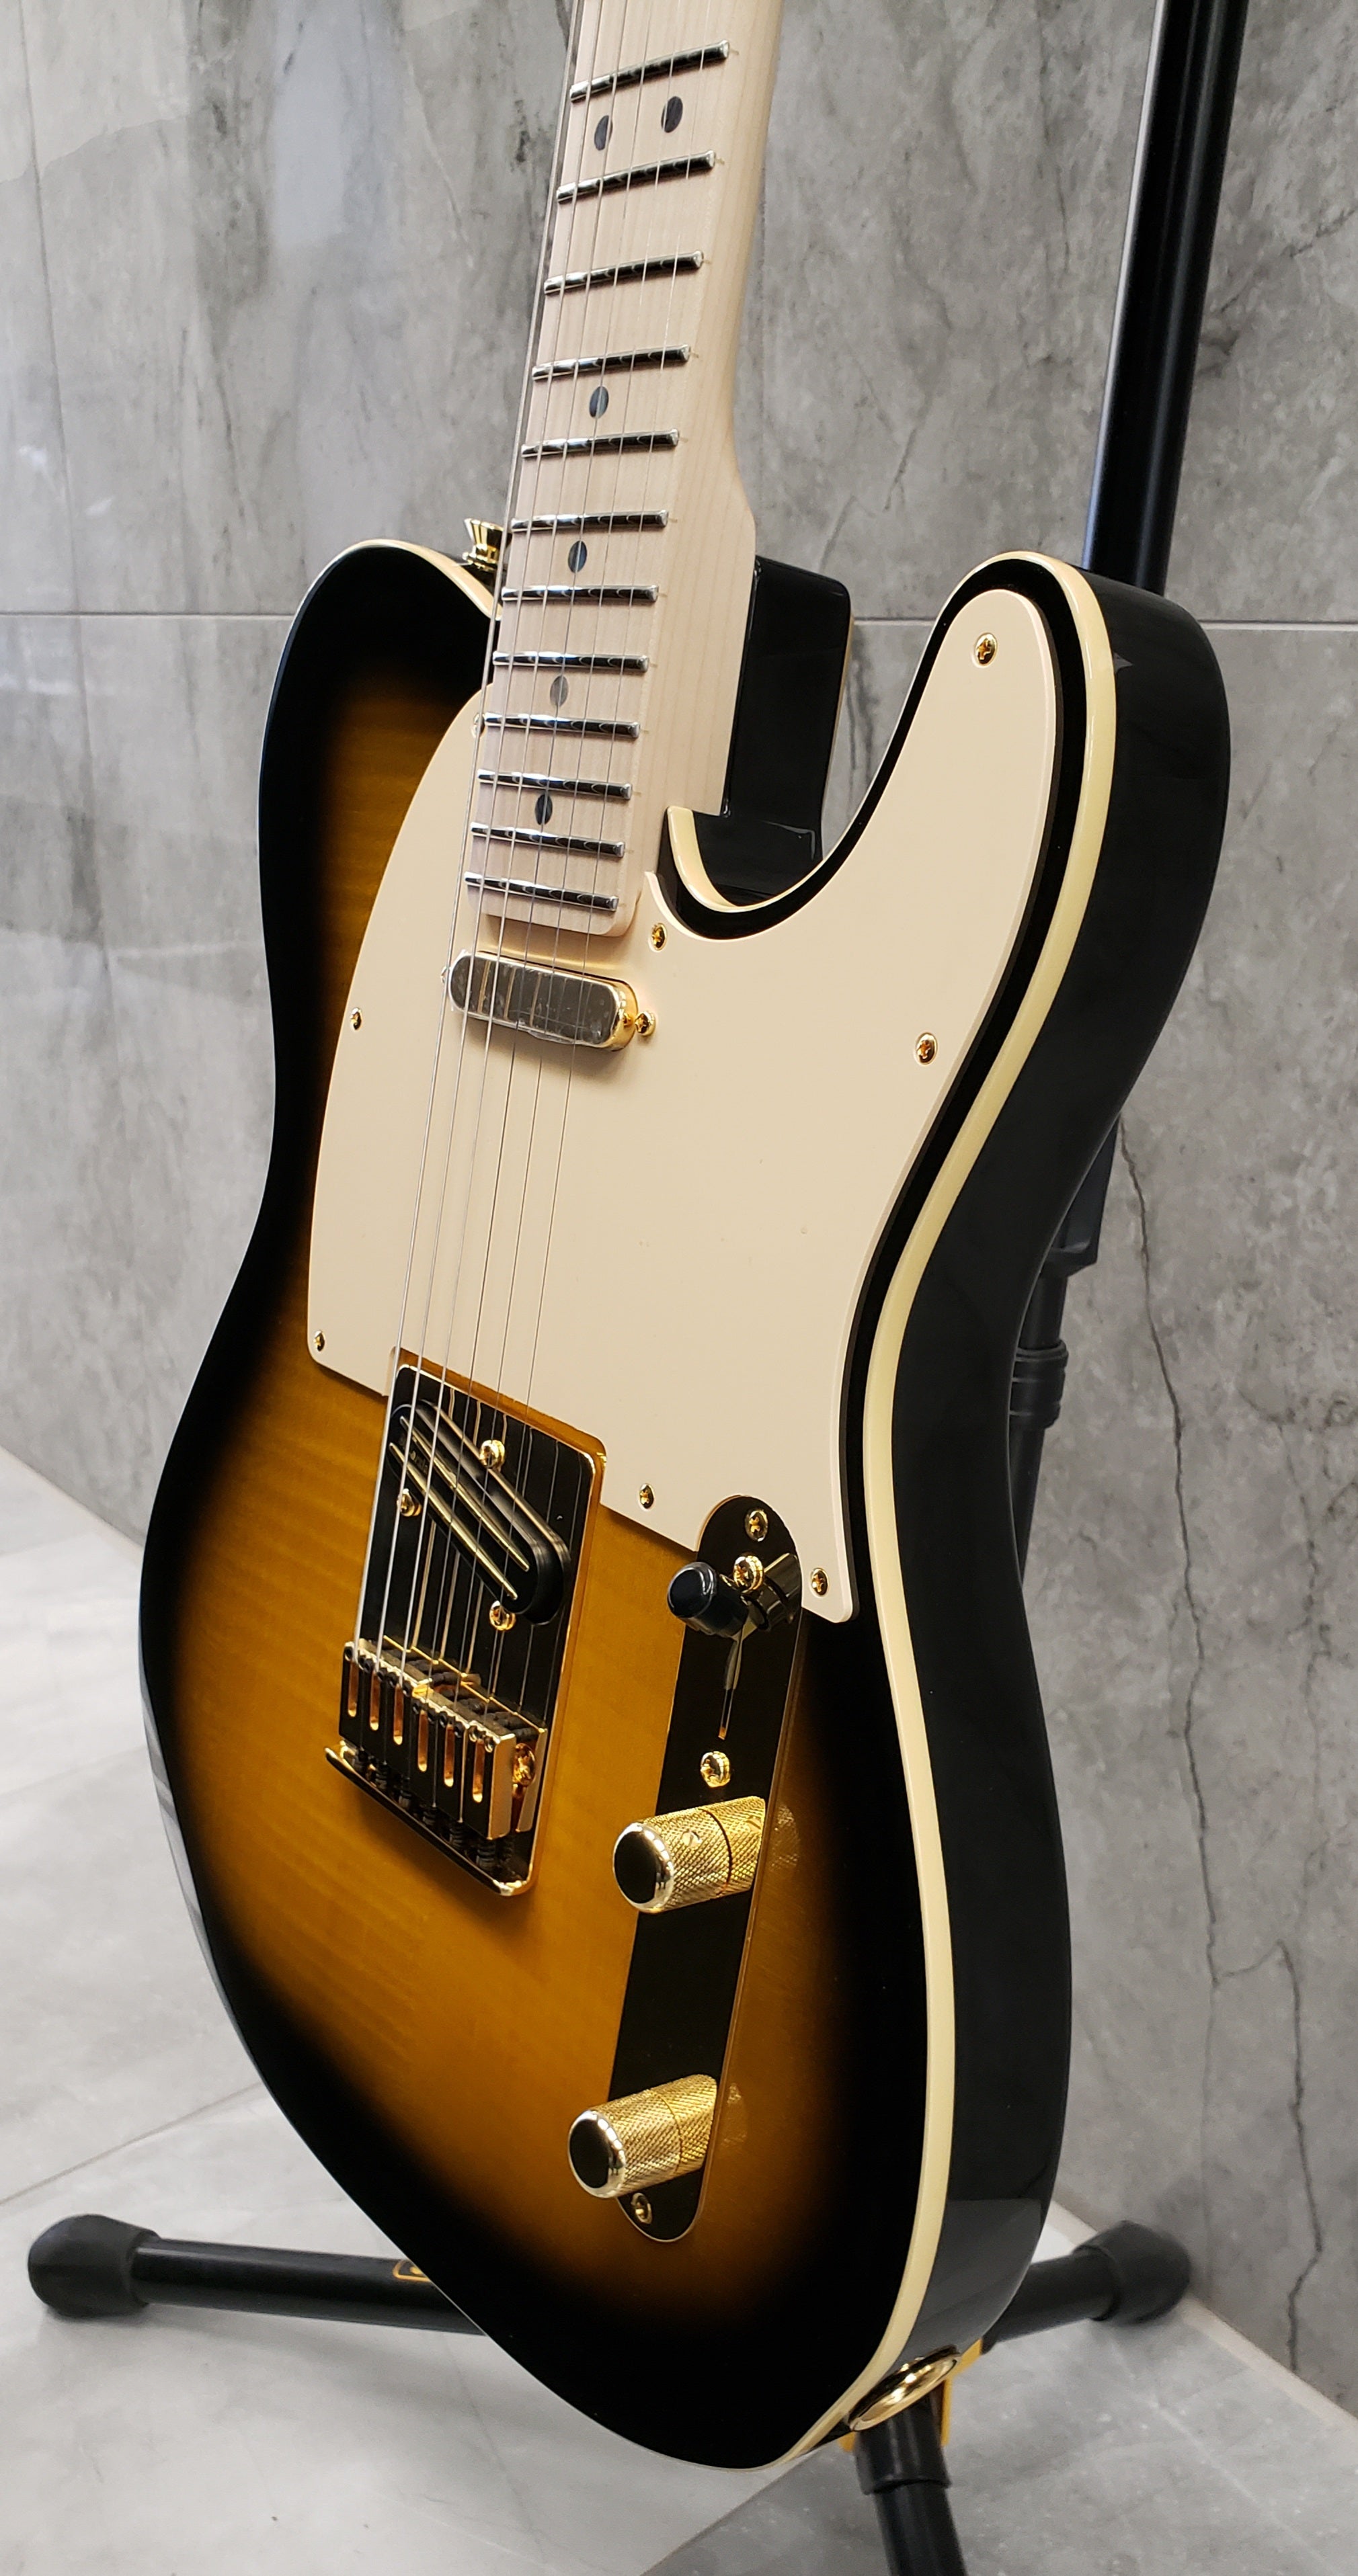 Fender Richie Kotzen Signature Telecaster Made in Japan Maple Fingerboard Brown Sunburst 0255202532